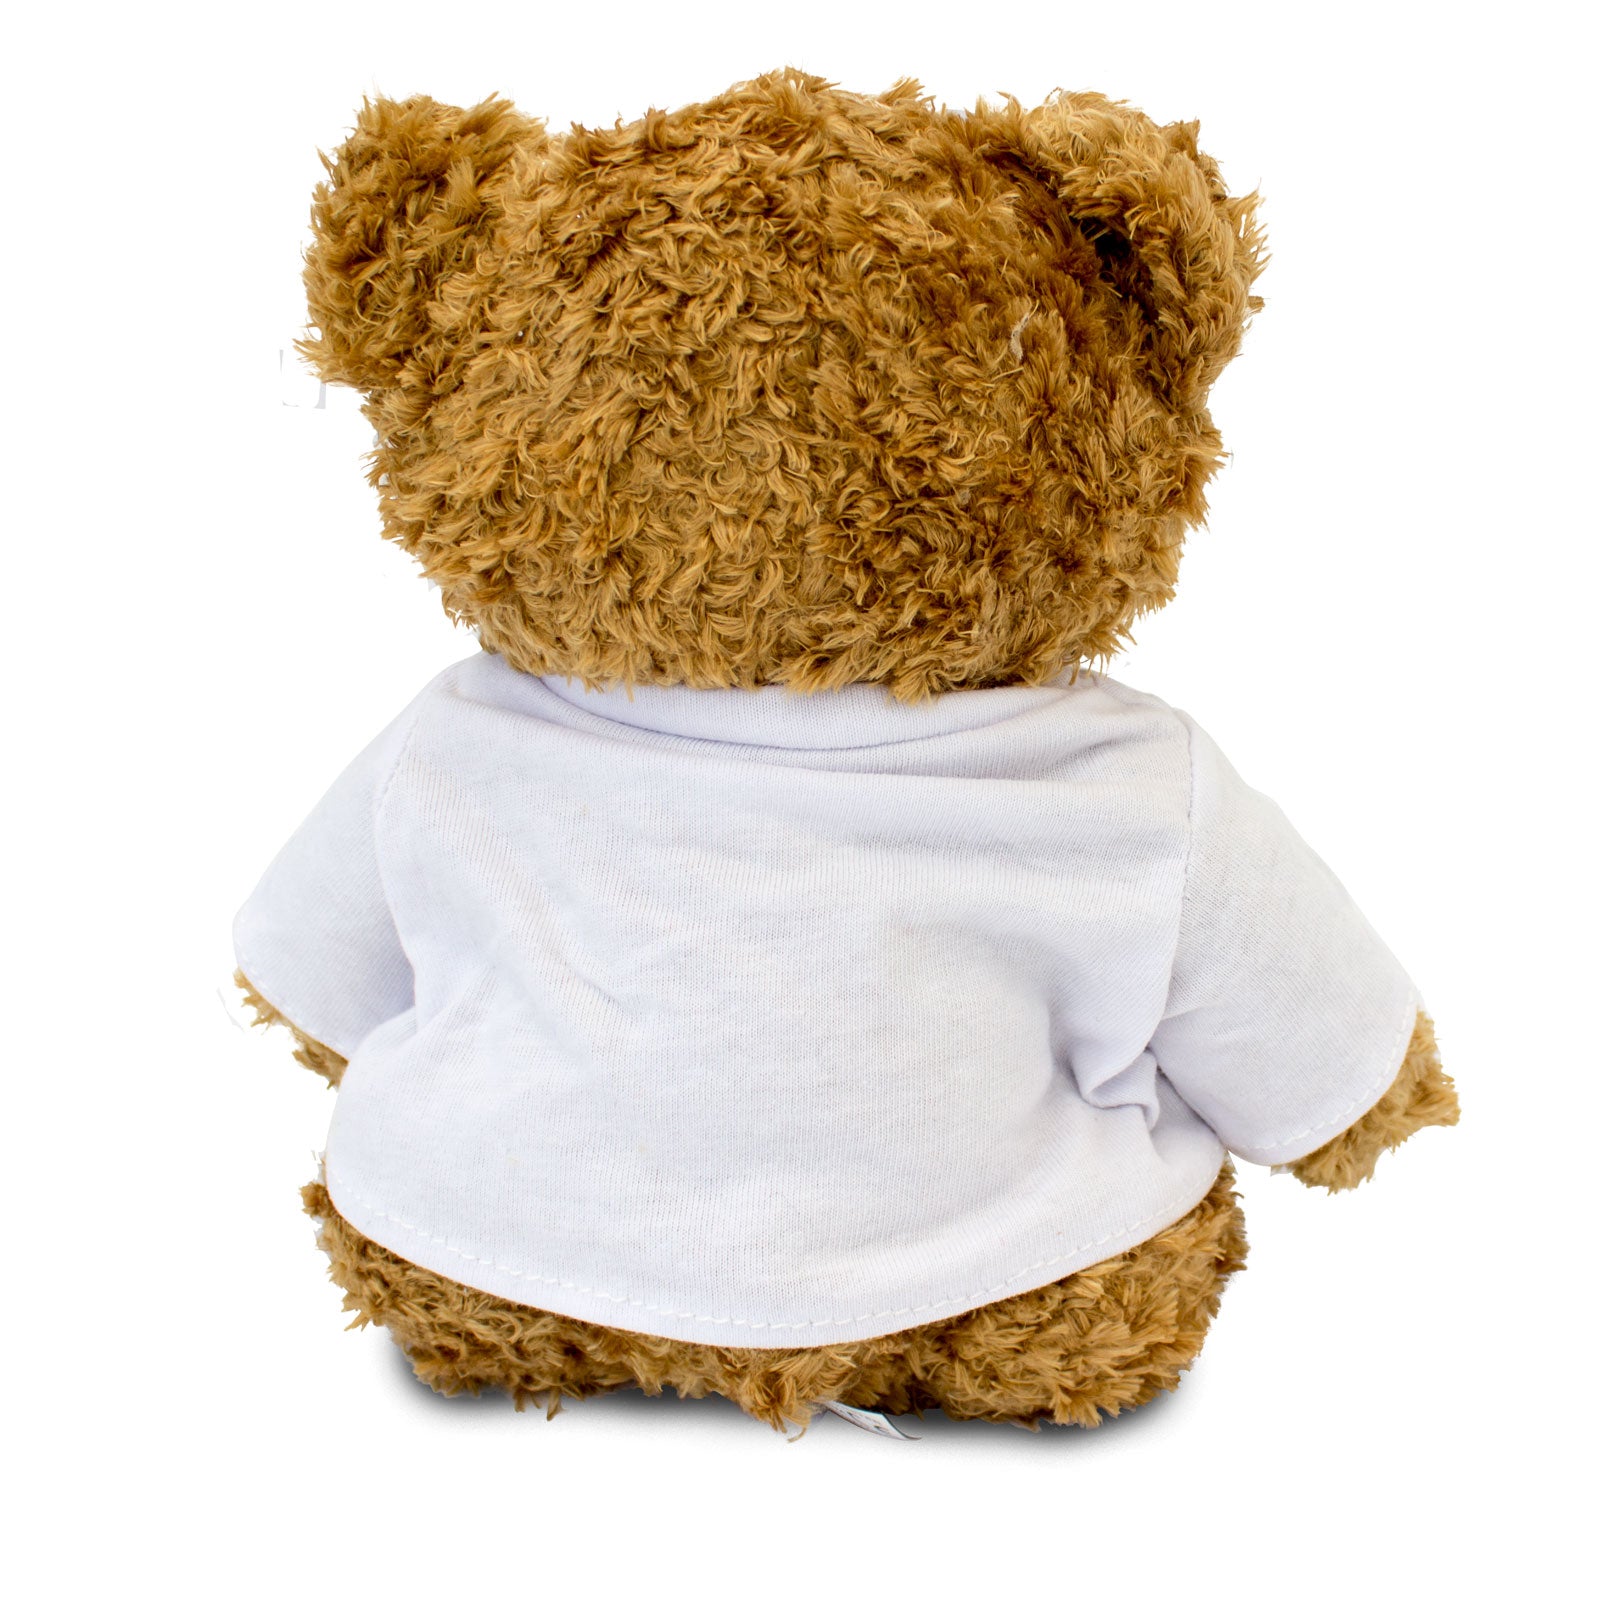 MY HEART BELONGS TO YOU - Teddy Bear - Gift Present - Love Romance